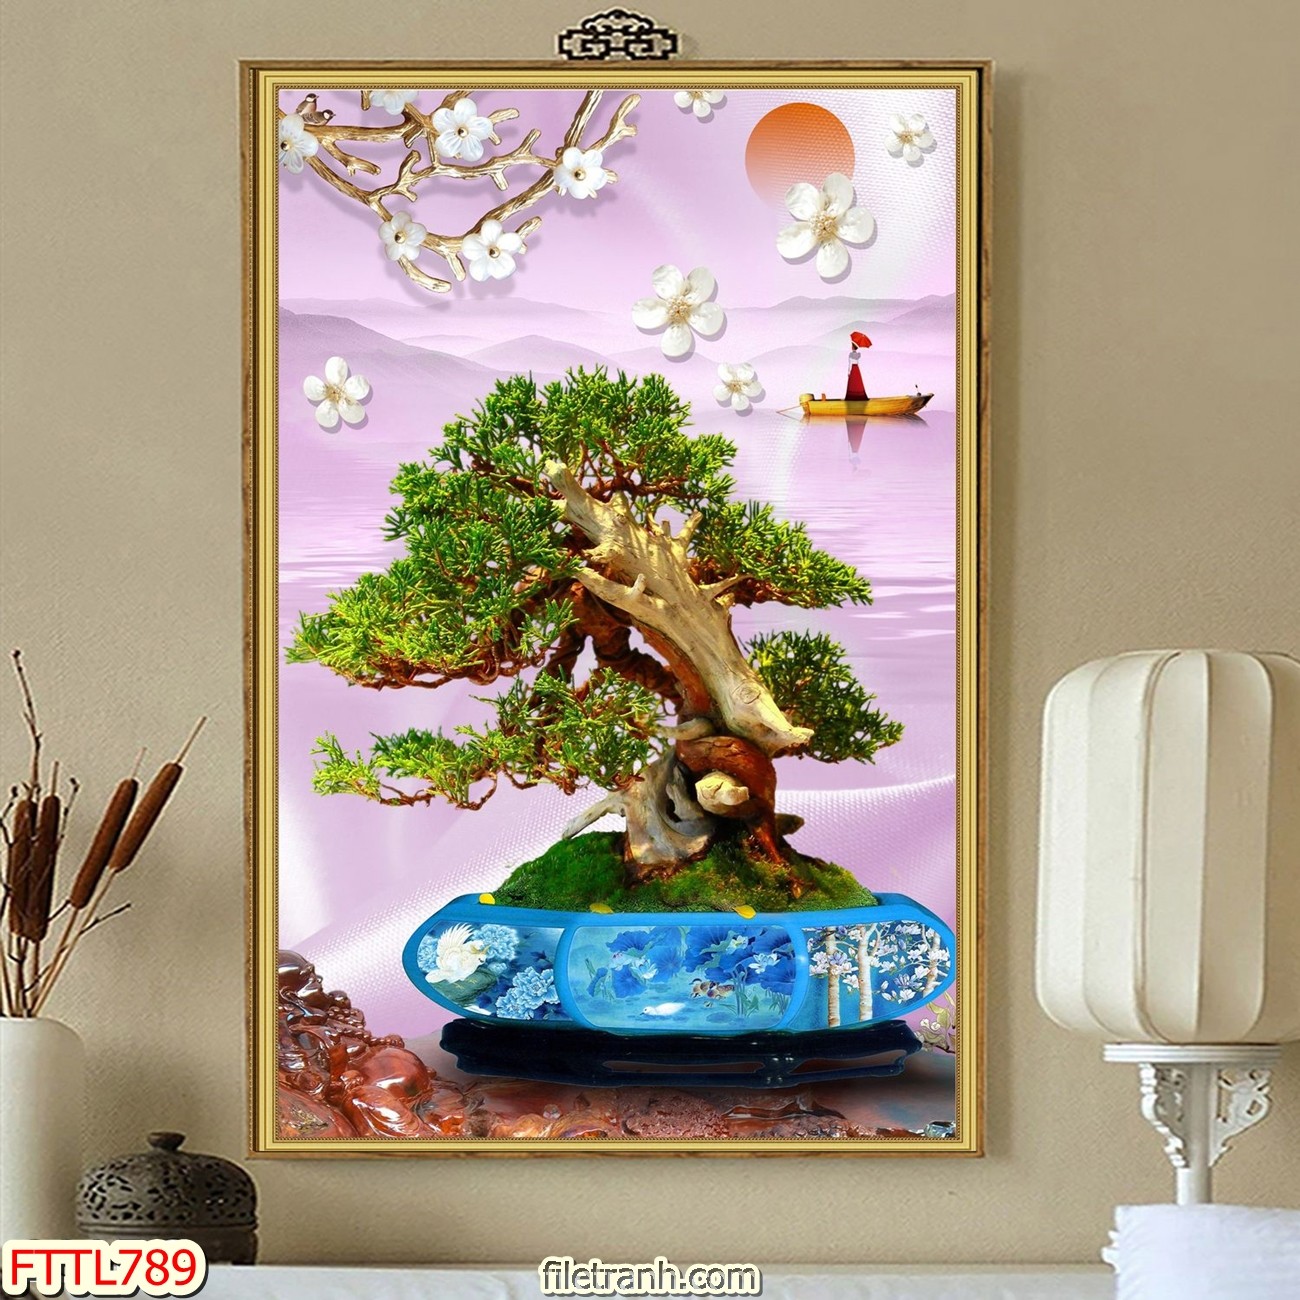 https://filetranh.com/file-tranh-chau-mai-bonsai/file-tranh-chau-mai-bonsai-fttl789.html